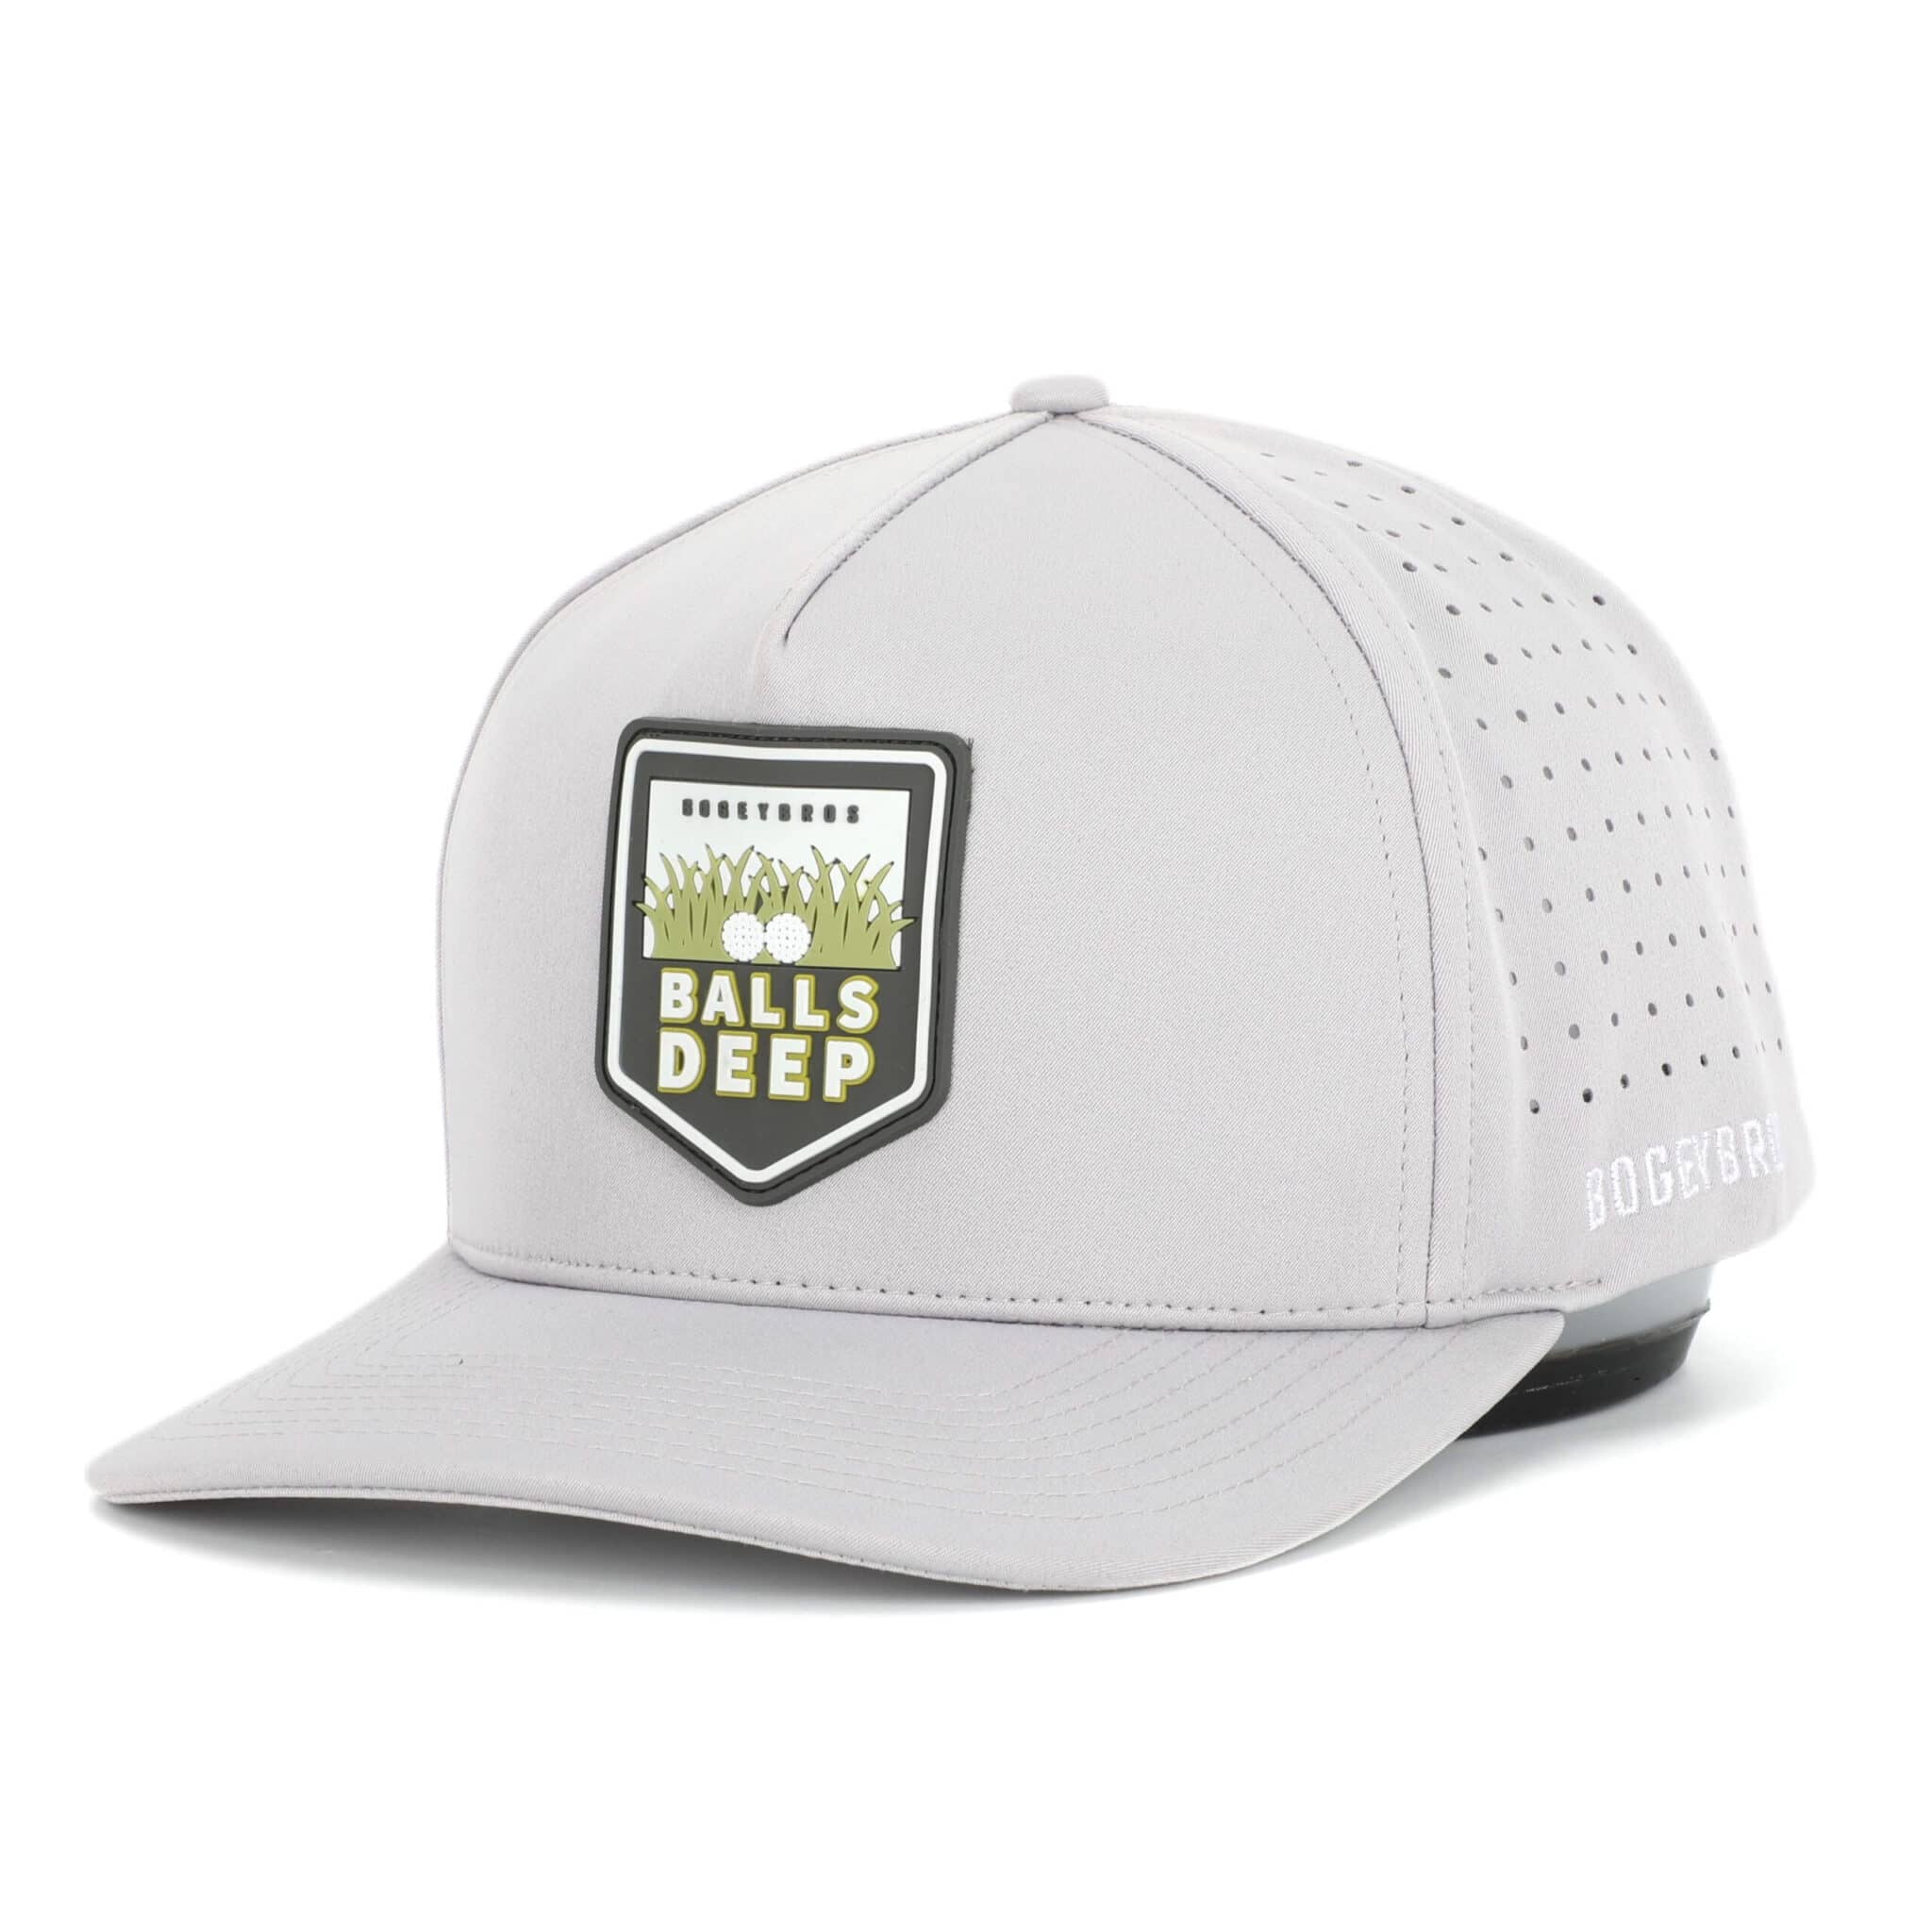 MSC The Plains Hat - Shop For State Line Road Hats Online